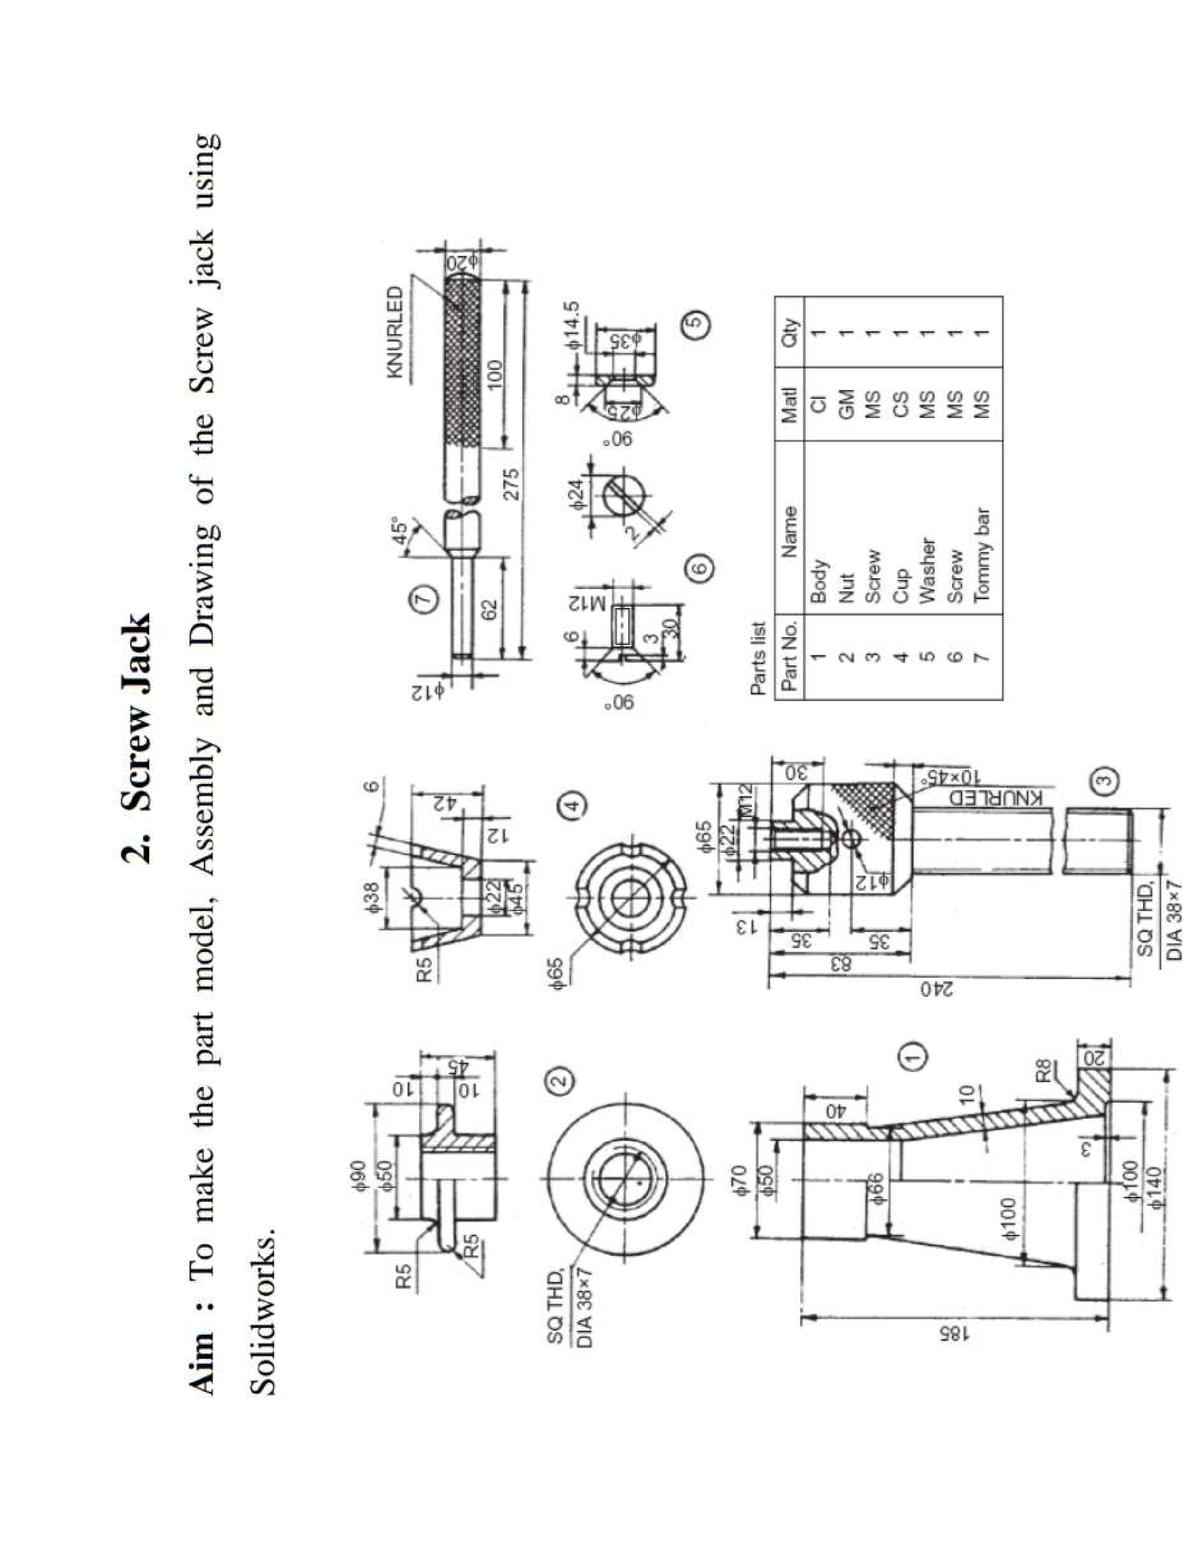 150 kN Capacity Screw Jack Machine - screw jack 150kn,actuator acme thread  150000n,lifting jack 150000 n Manufacturer,Supplier,Factory - Jacton  Industry Co.,Ltd.